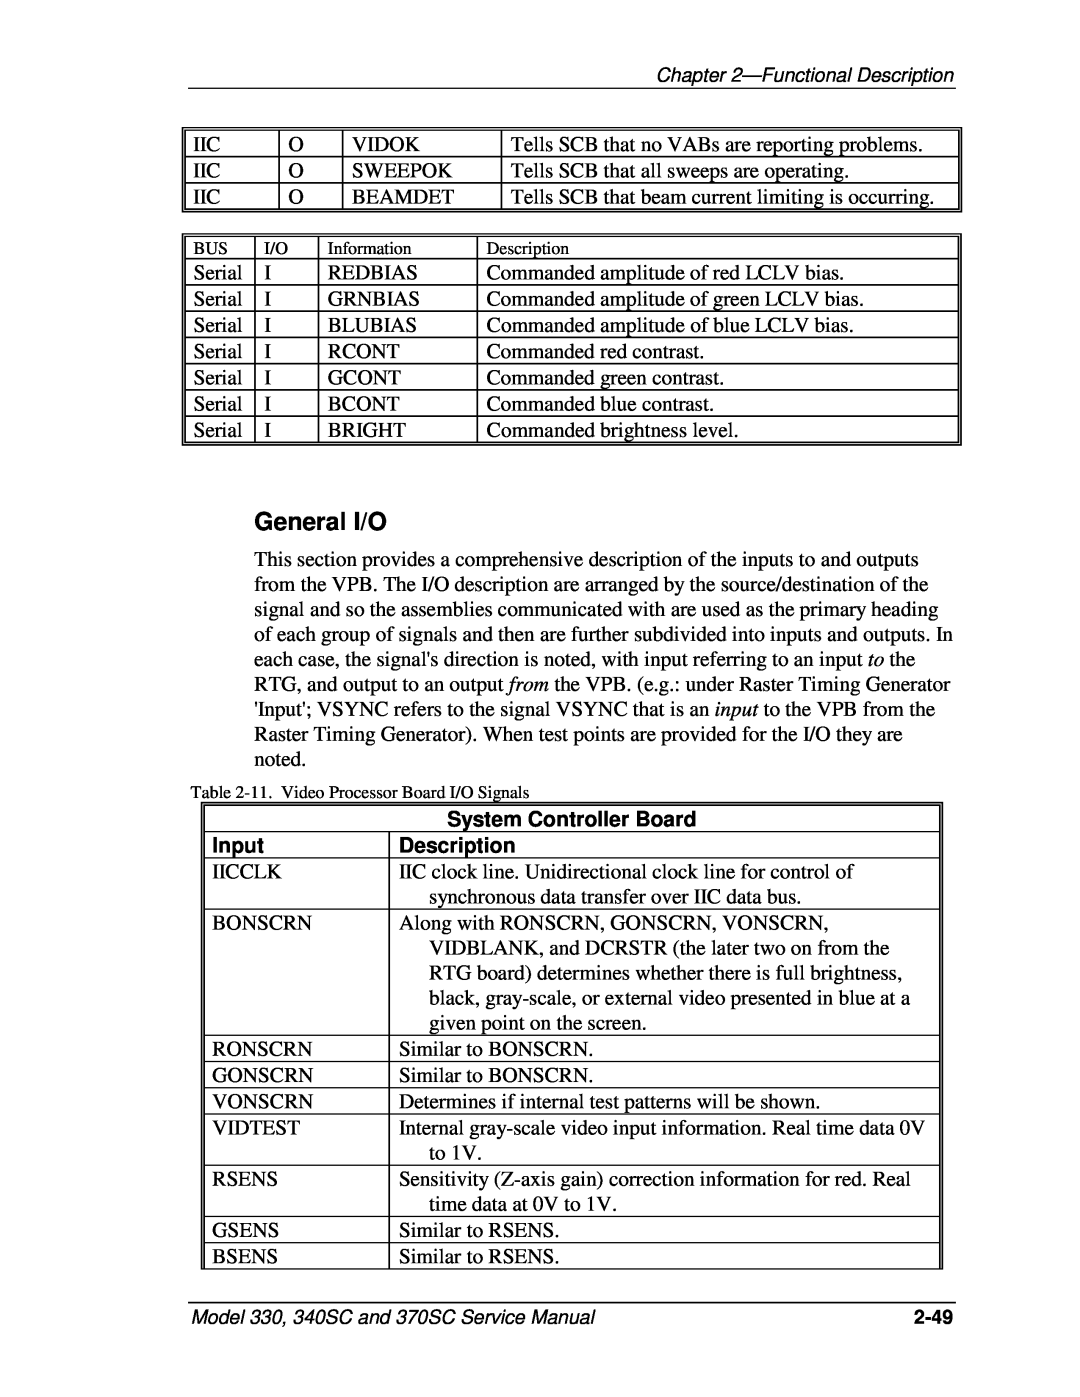 JVC 370 SC, 330, 340 SC service manual General I/O, System Controller Board, Input, Description 